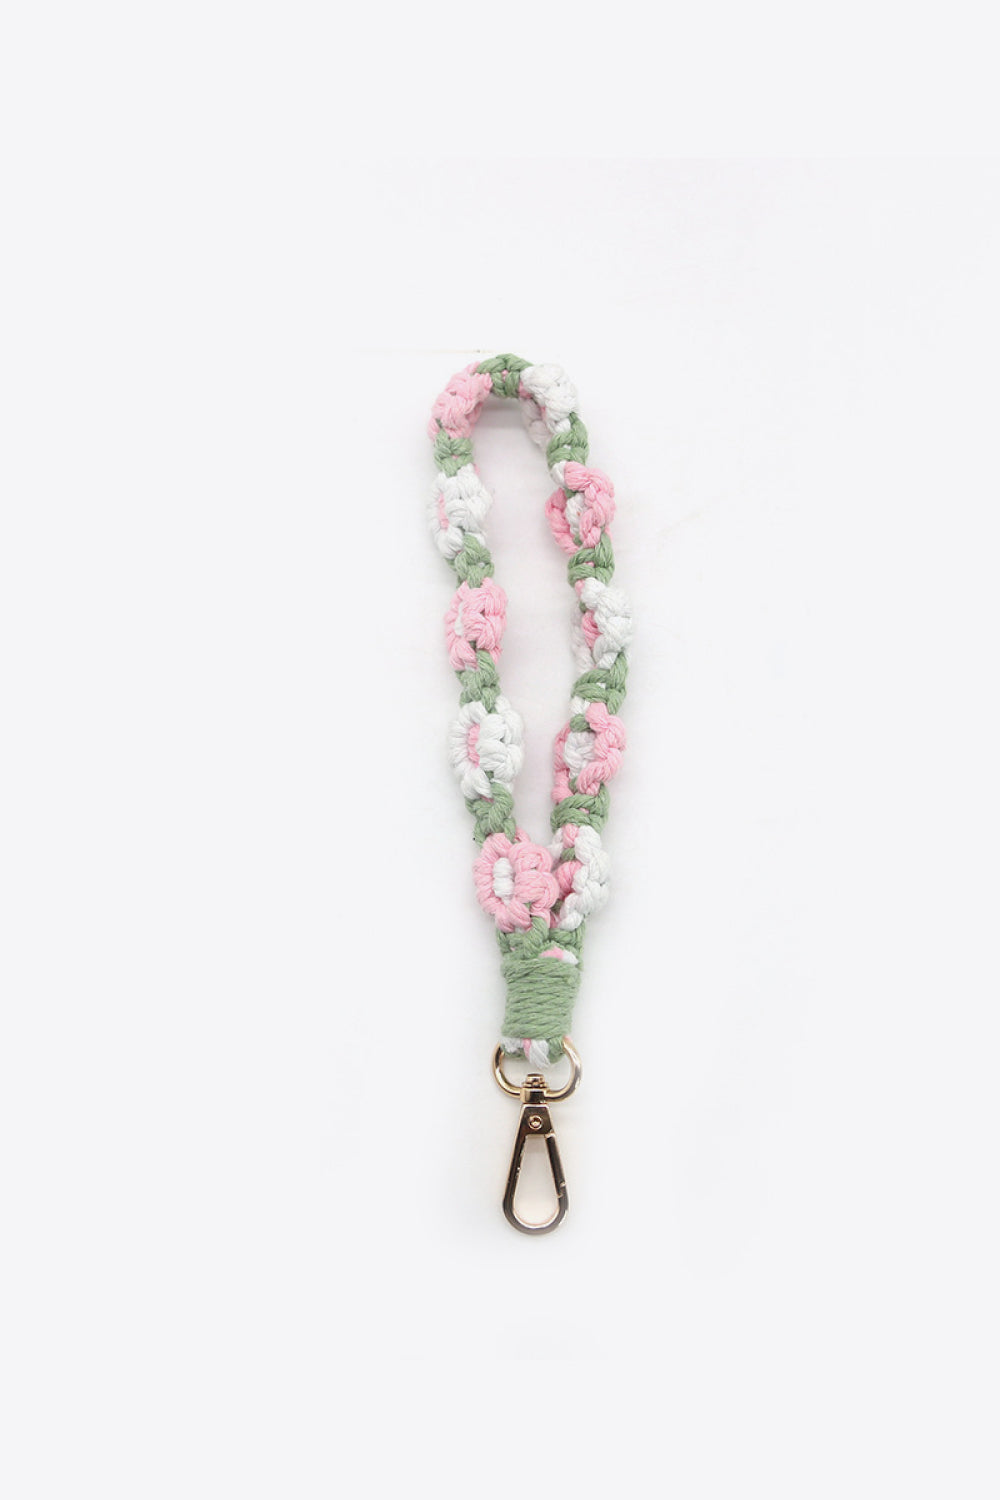 Trendsi Cupid Beauty Supplies Pink/Green / One Size Keychains Assorted 4-Piece Macrame Flower Keychain